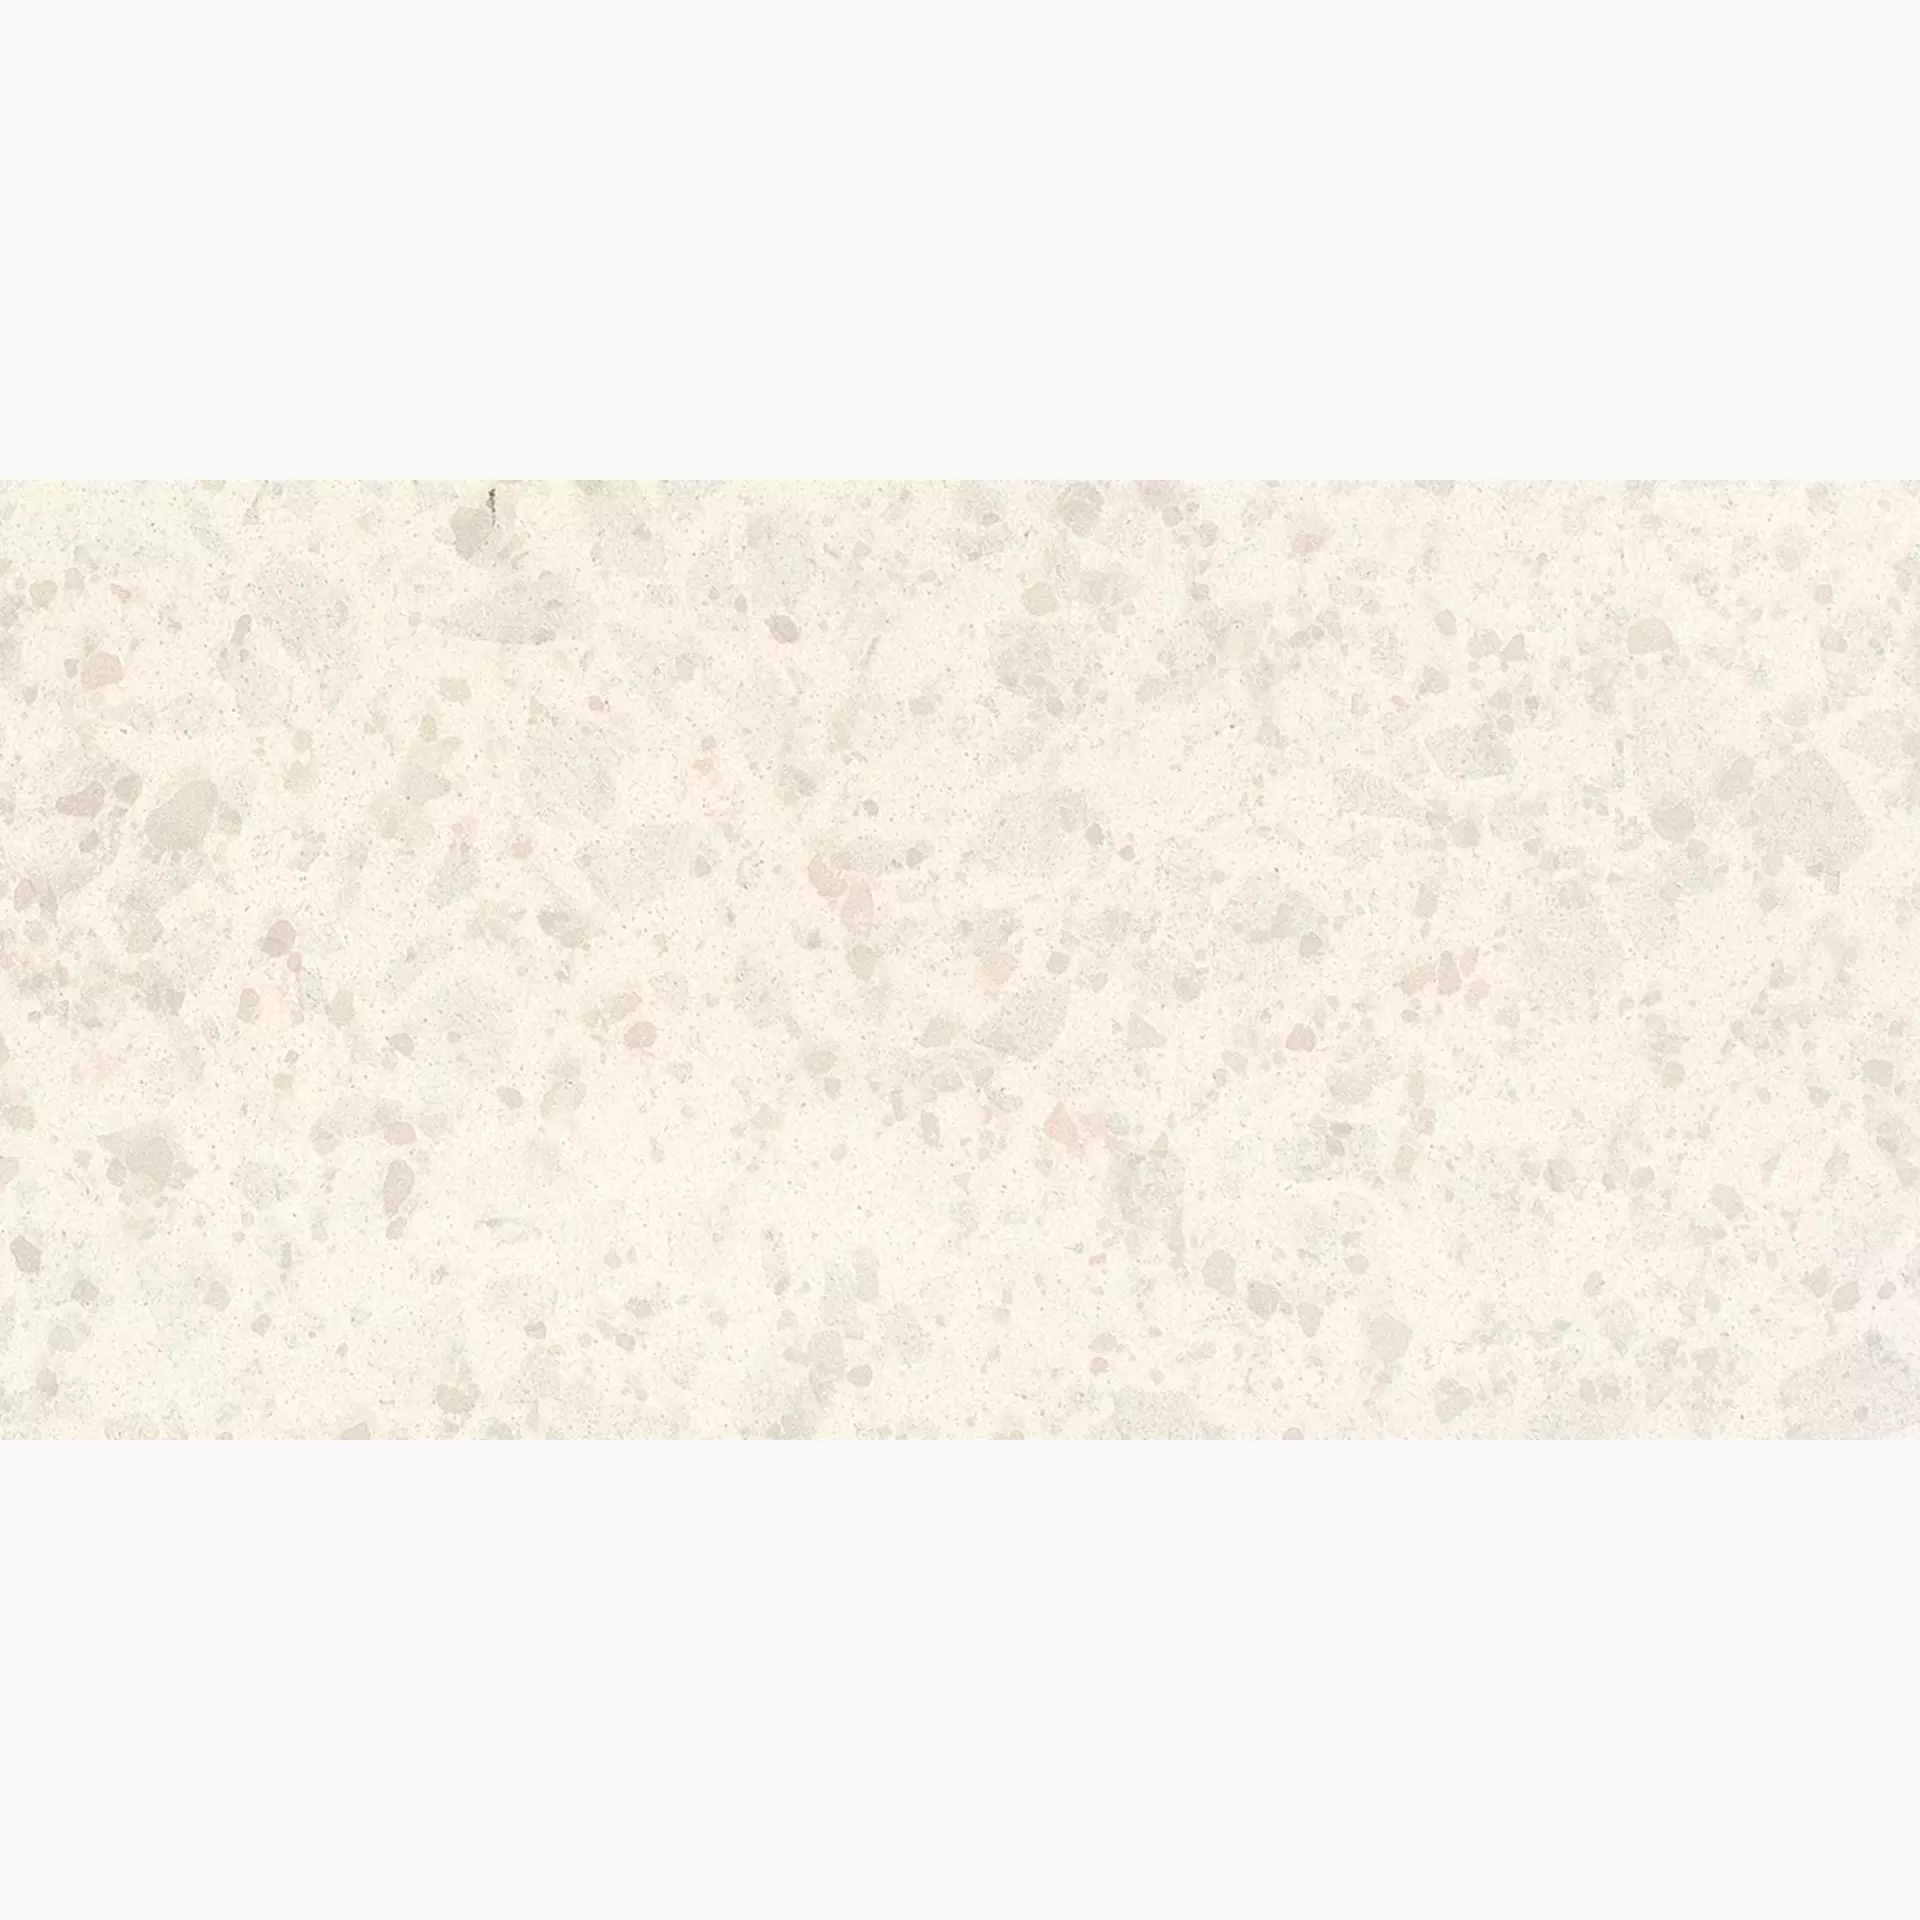 Gigacer Inclusioni Soave Bianco Perla Matt 12INCL3060BIAPERMAT 30x60cm 12mm